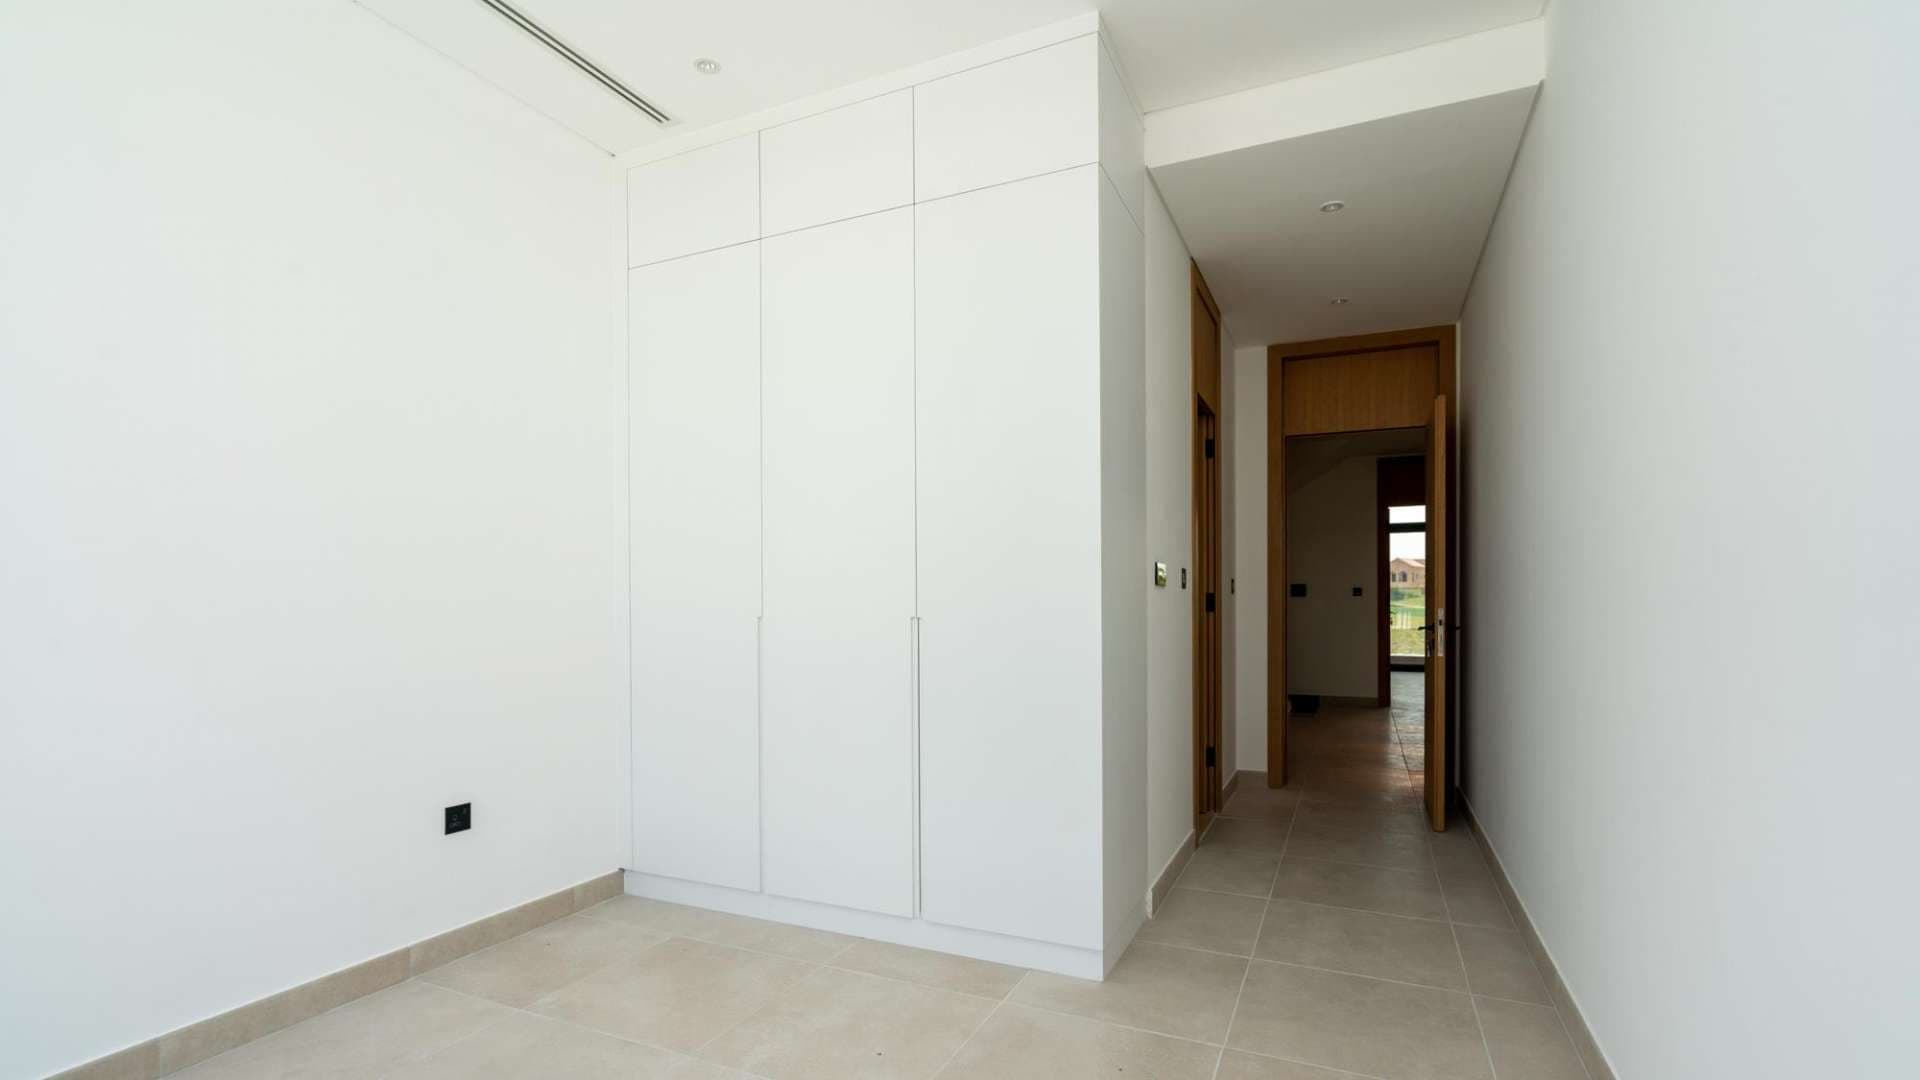  Bedroom Villa For Sale Jumeirah Luxury Living Lp0646 F064cf46fb9dc80.jpg